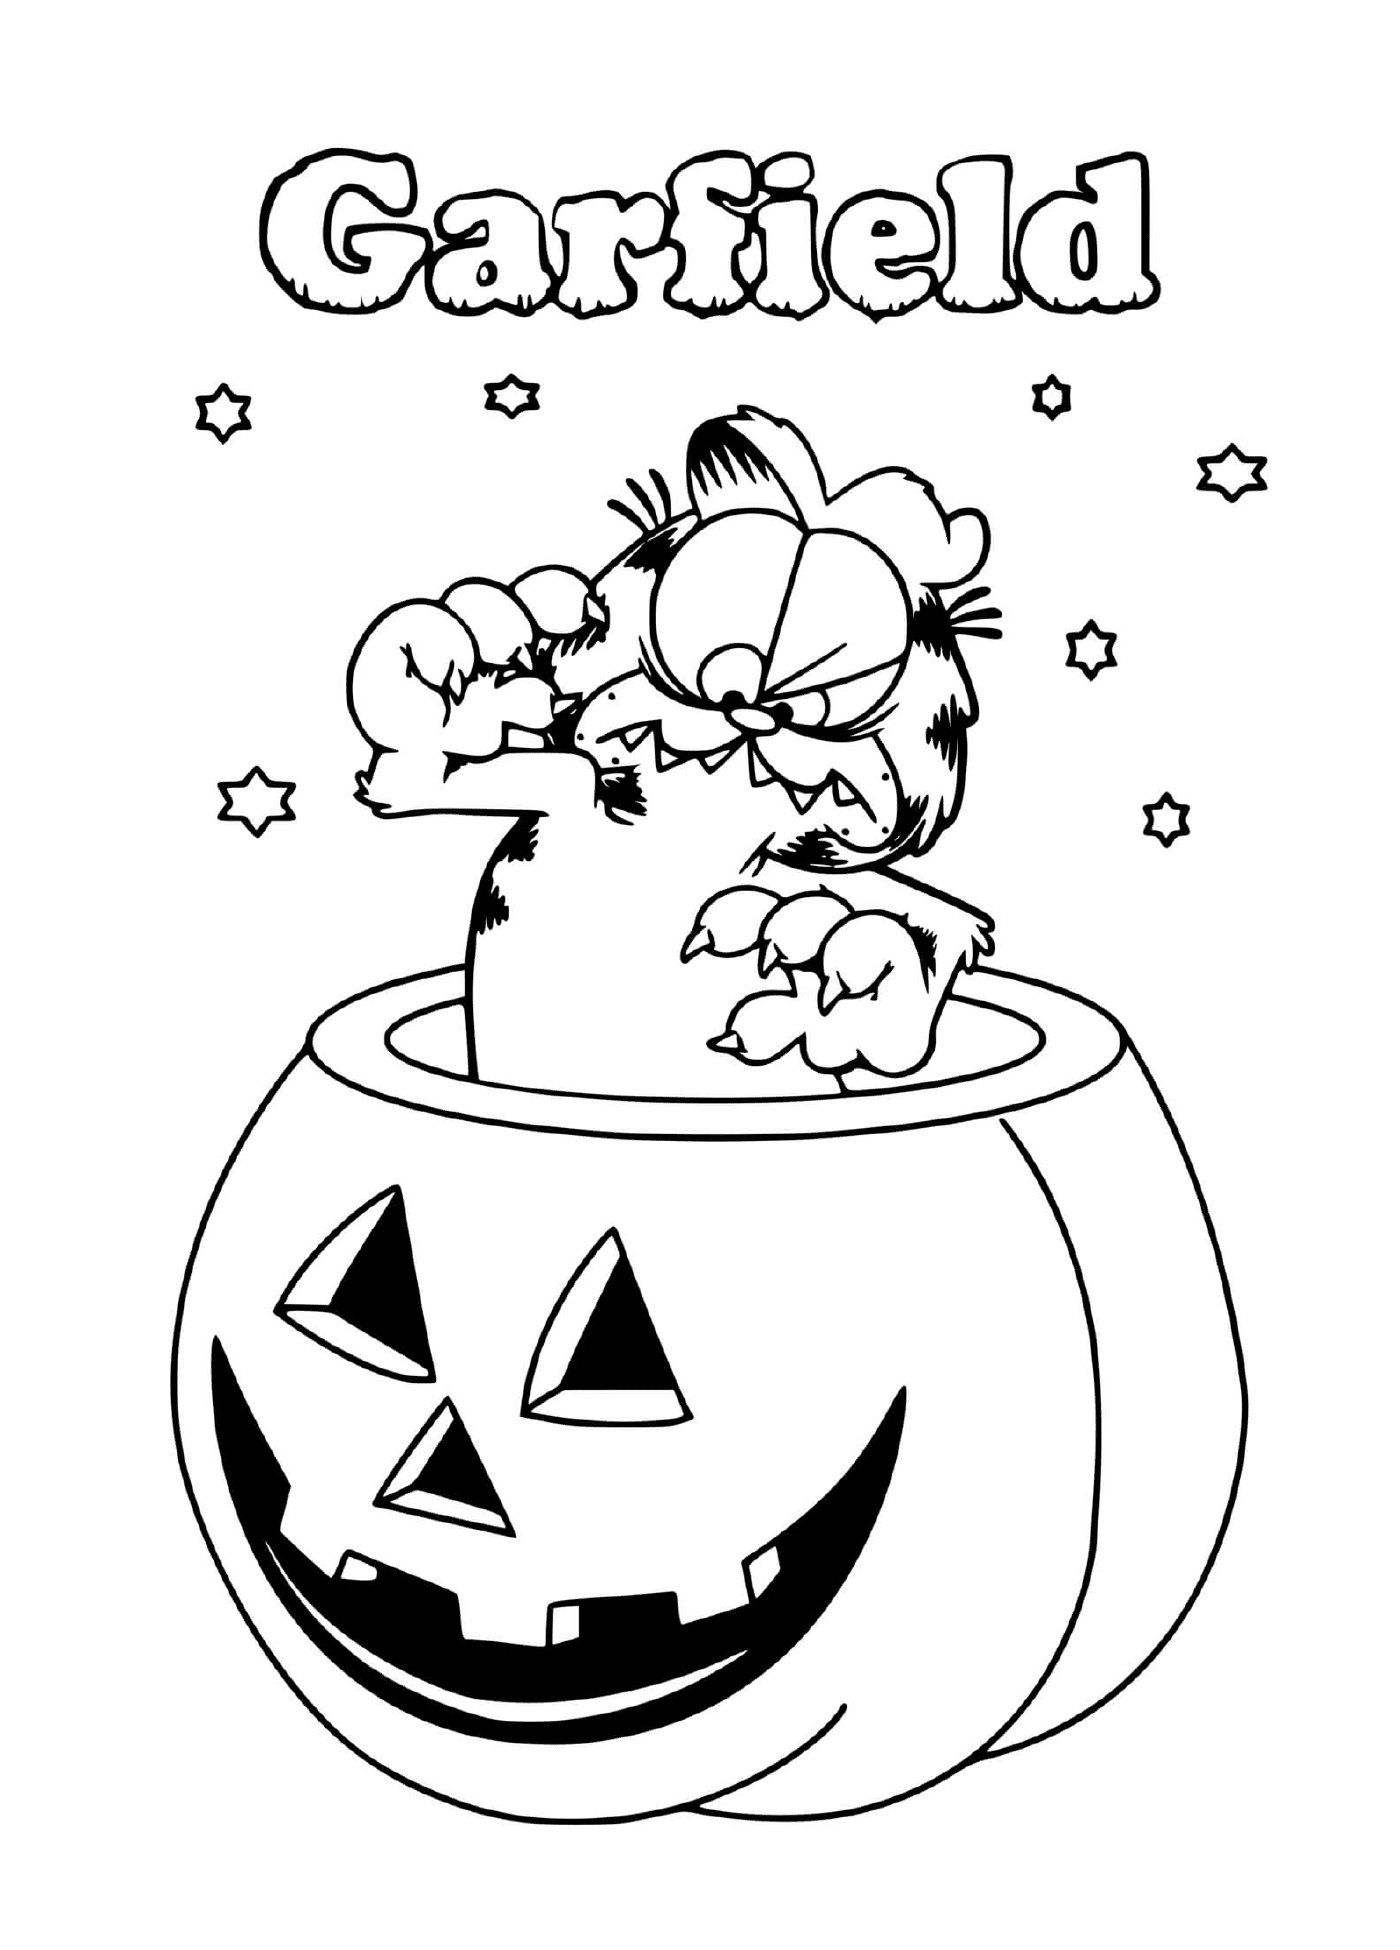  Garfield celebra Halloween en una calabaza 